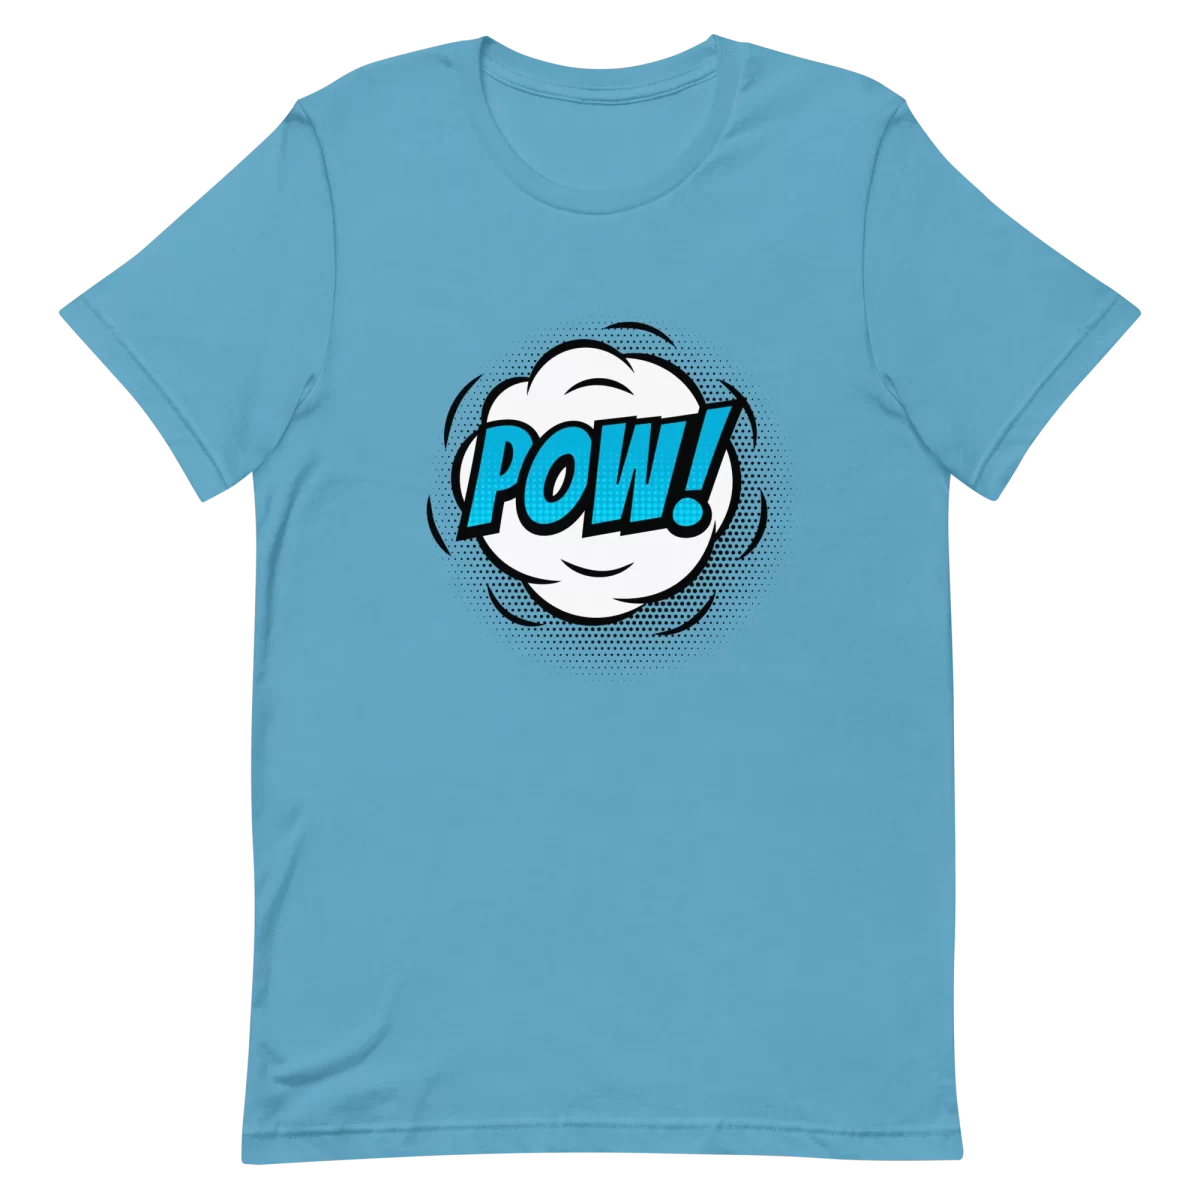 Unisex T-Shirt - POW! - Ocean Blue